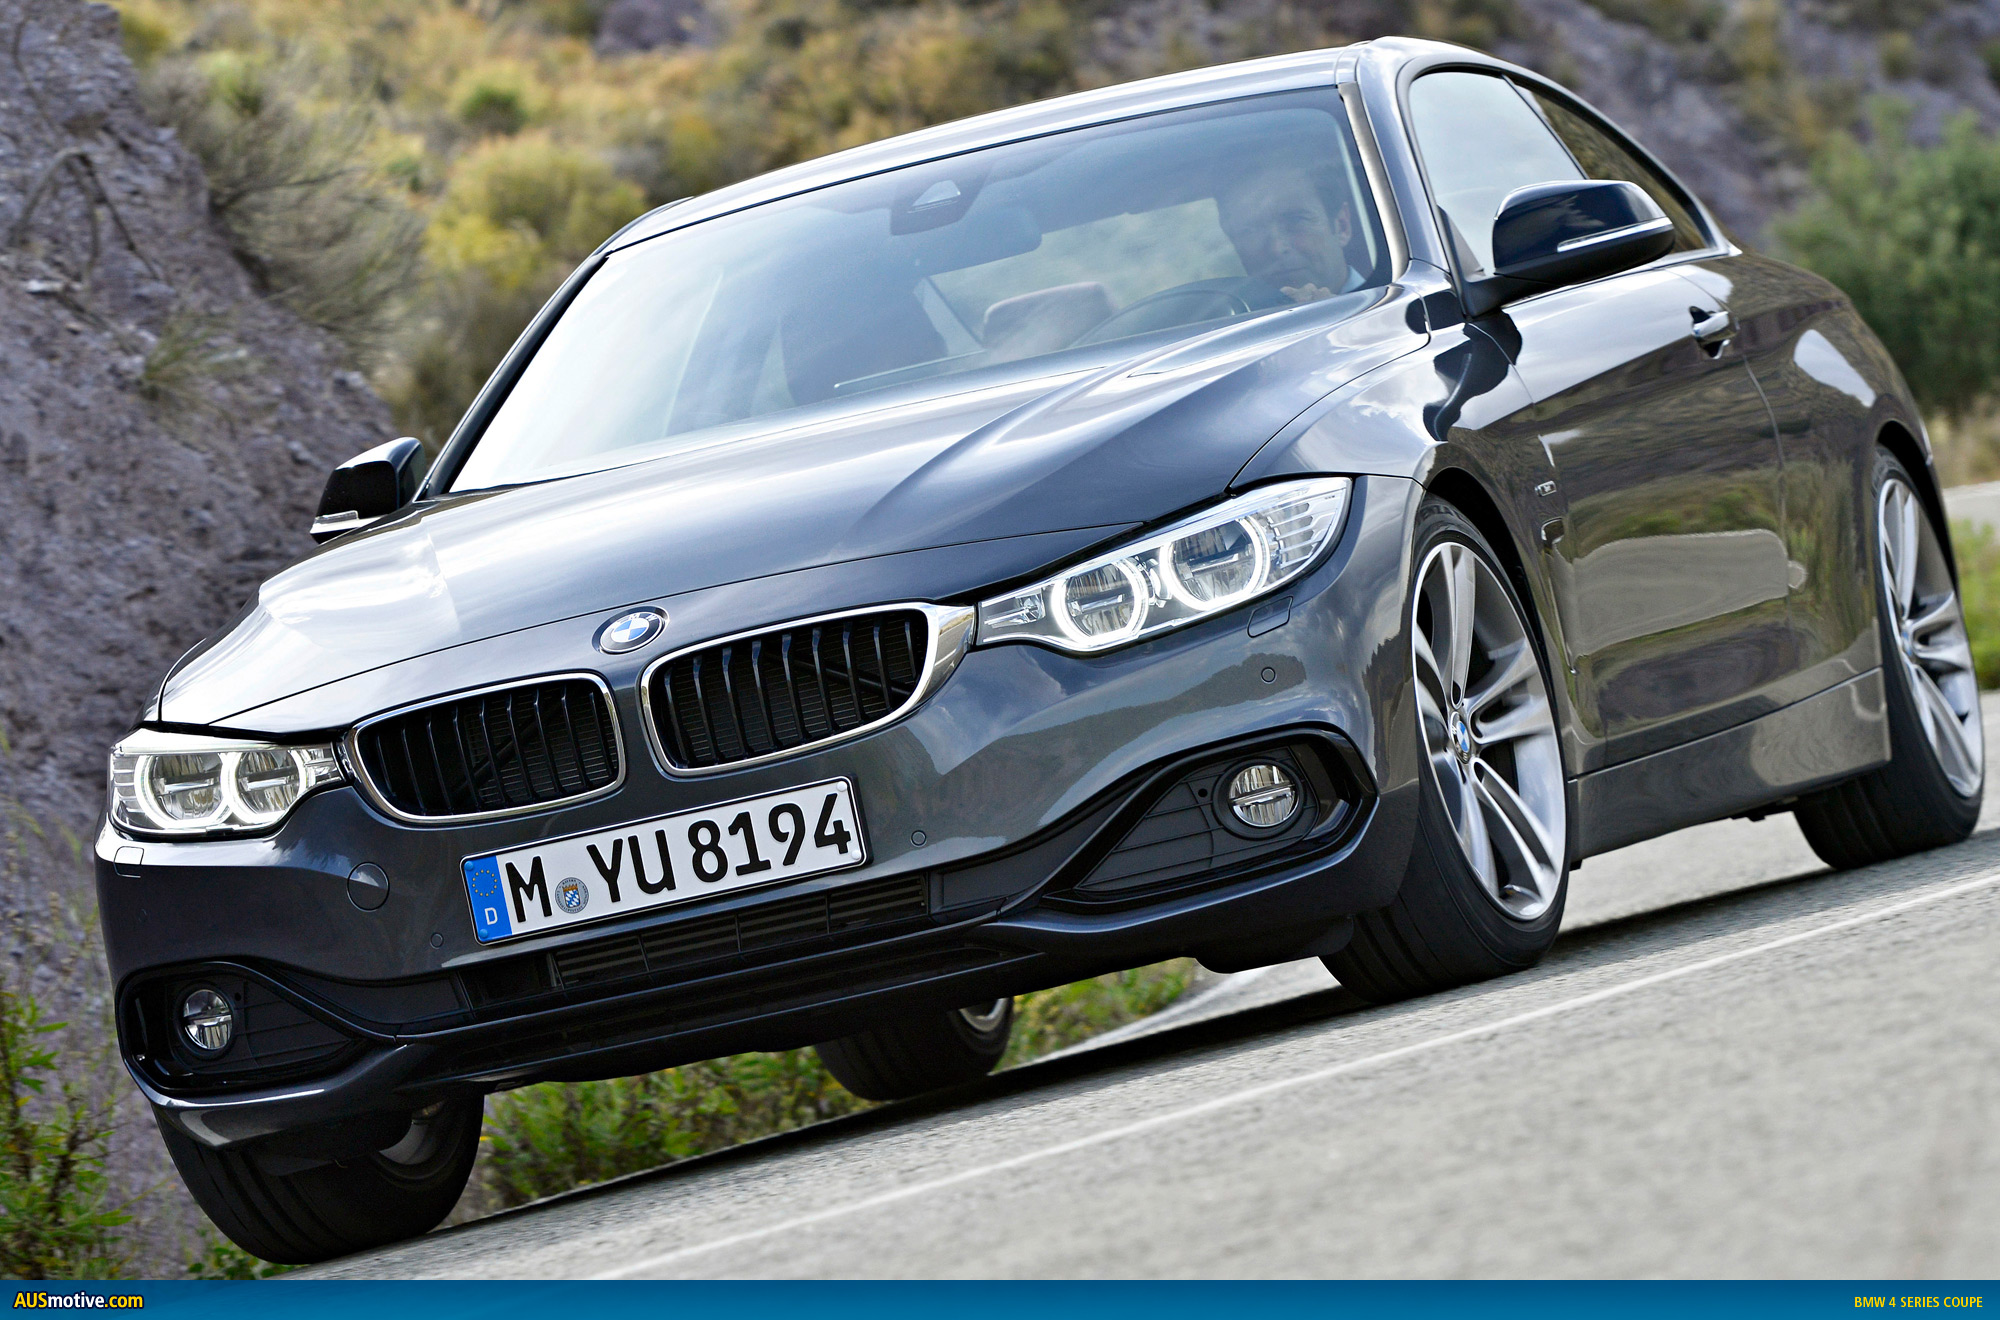 AUSmotive.com » OFFICIAL: BMW 4 Series Coupe – Australian pricing